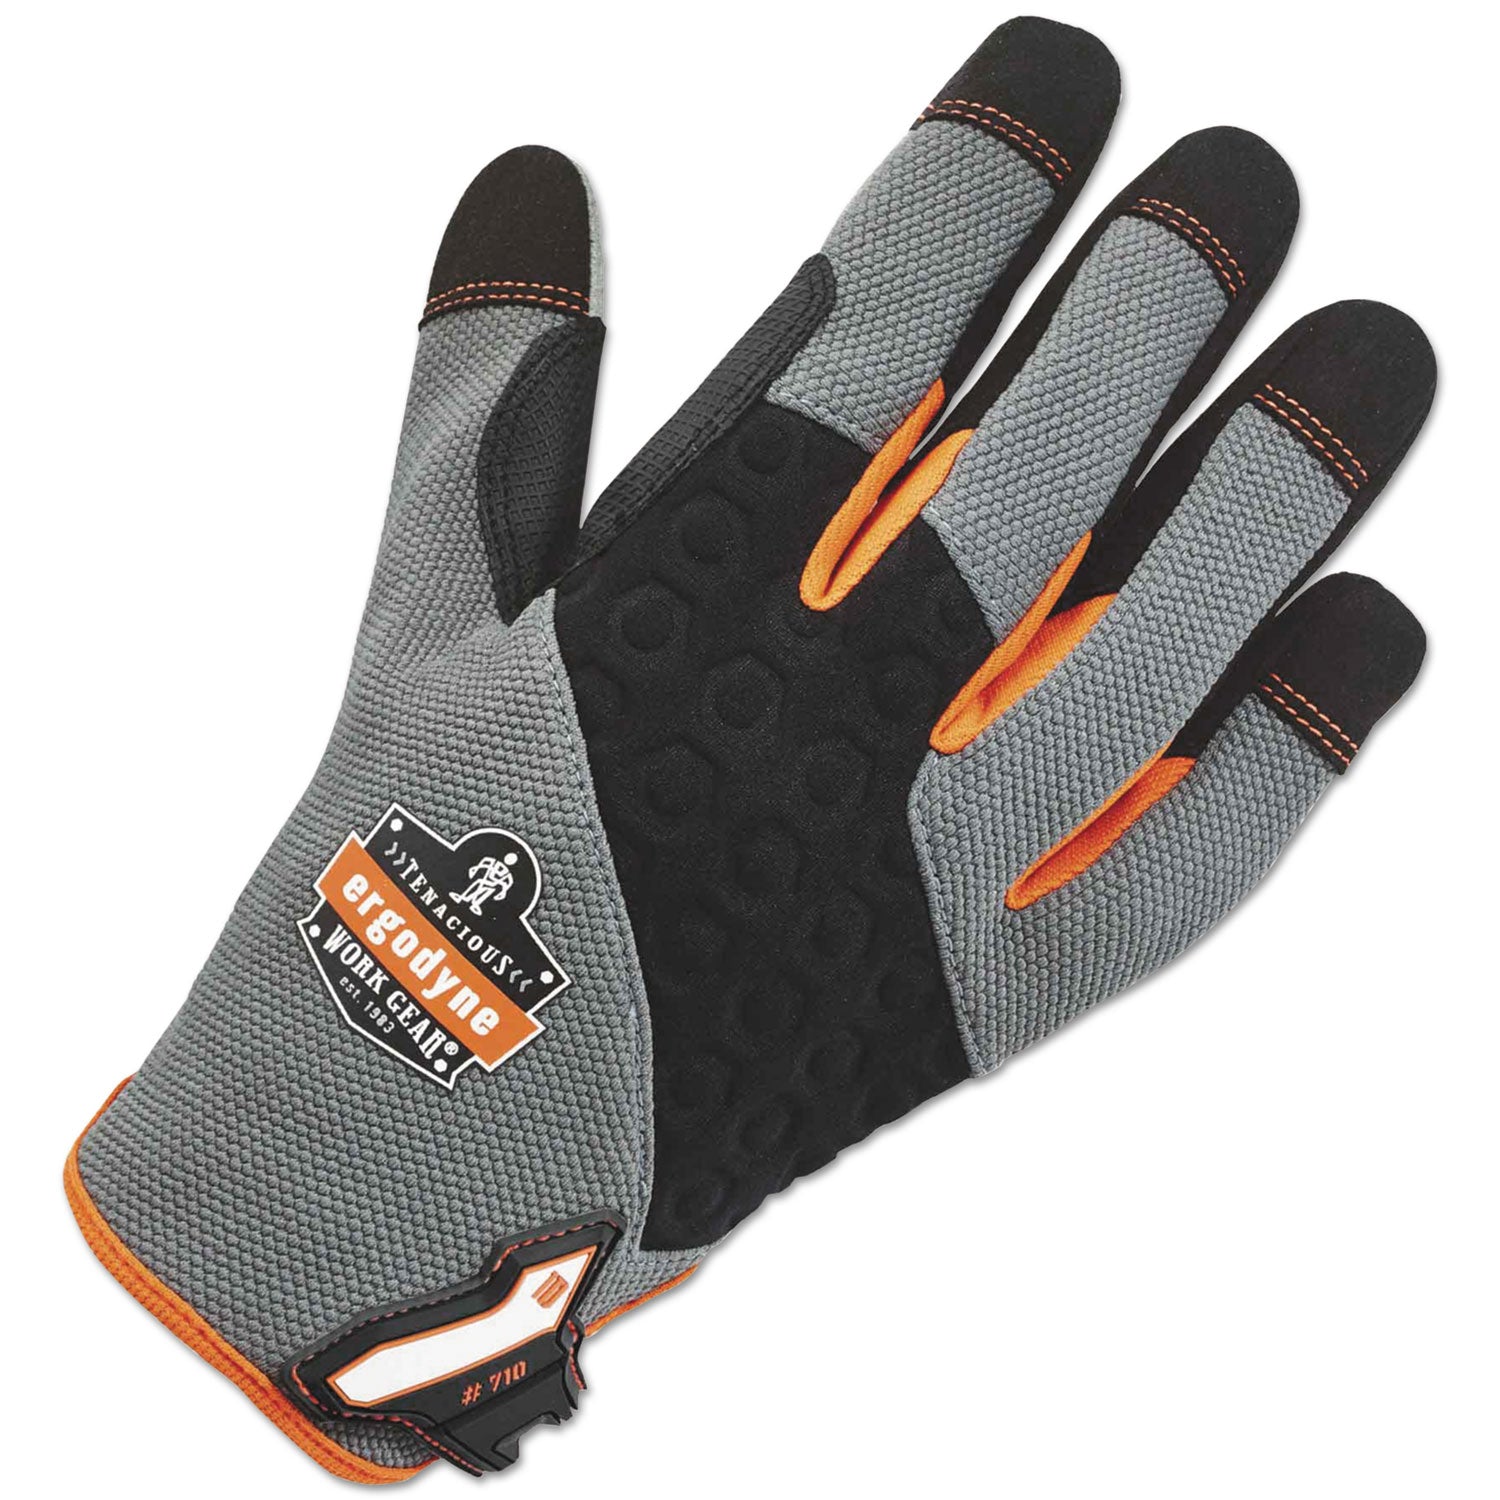 proflex-710-heavy-duty-utility-gloves-medium-gray-1-pair-ships-in-1-3-business-days_ego17043 - 1